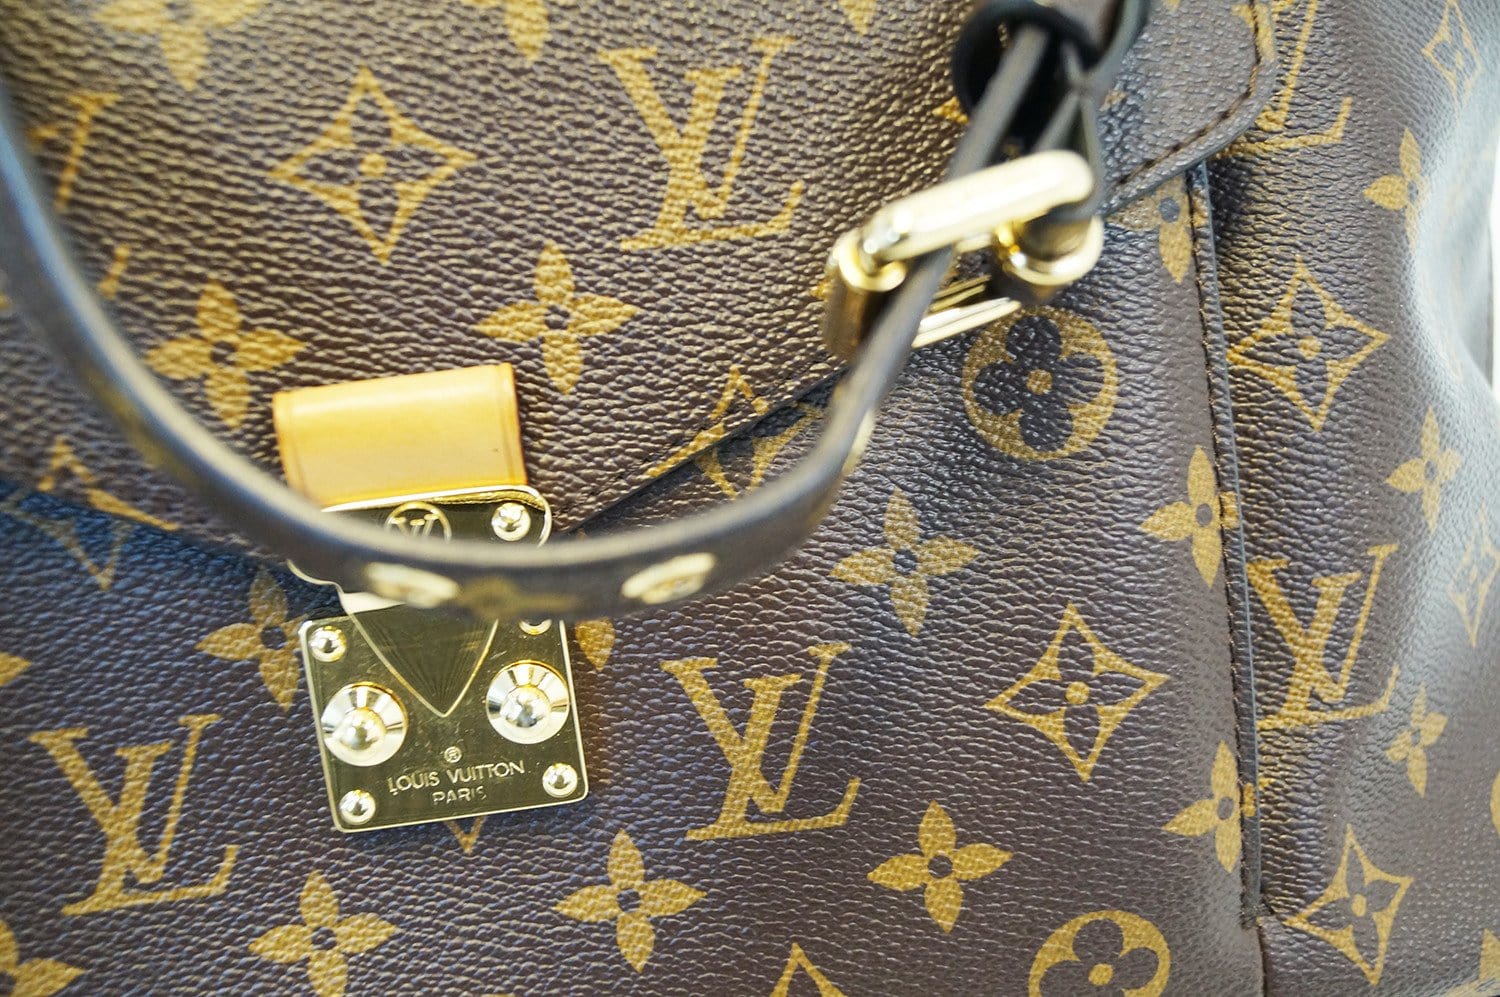 Authentic Louis Vuitton Metis Hobo Bag